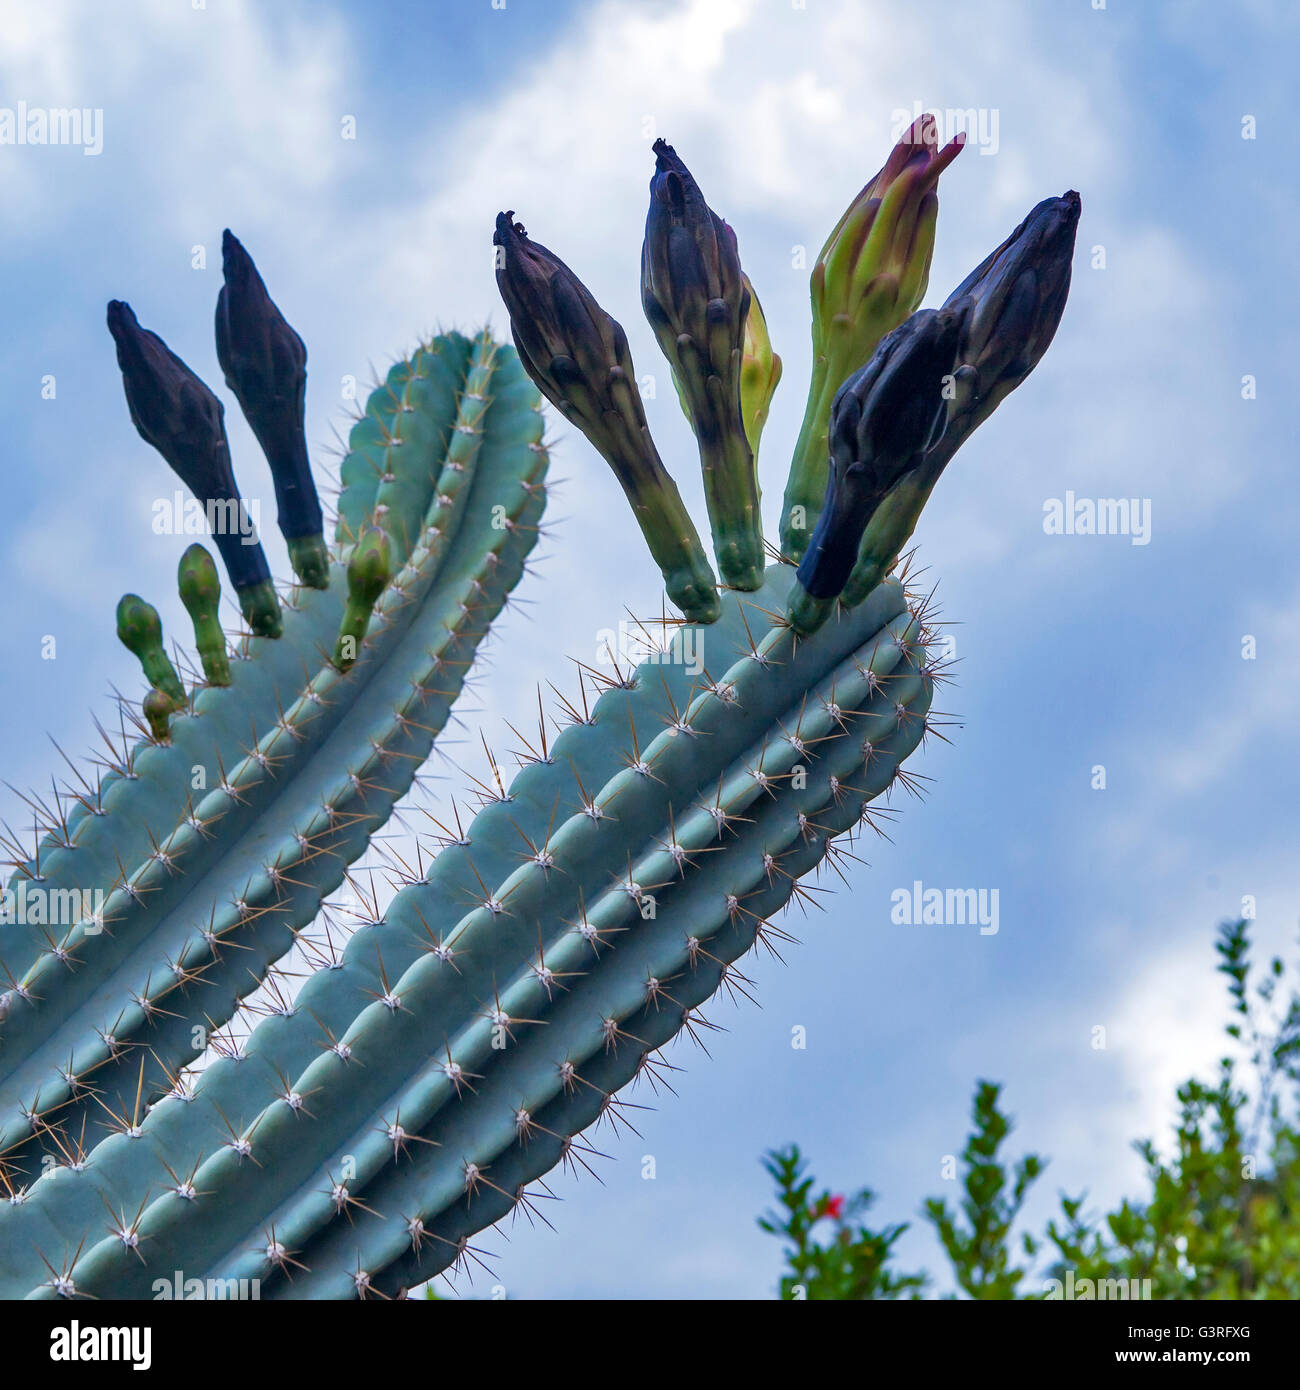 Cactus - Peruvian Apple - Cereus Peruvianus growing naturally outdoors Stock Photo